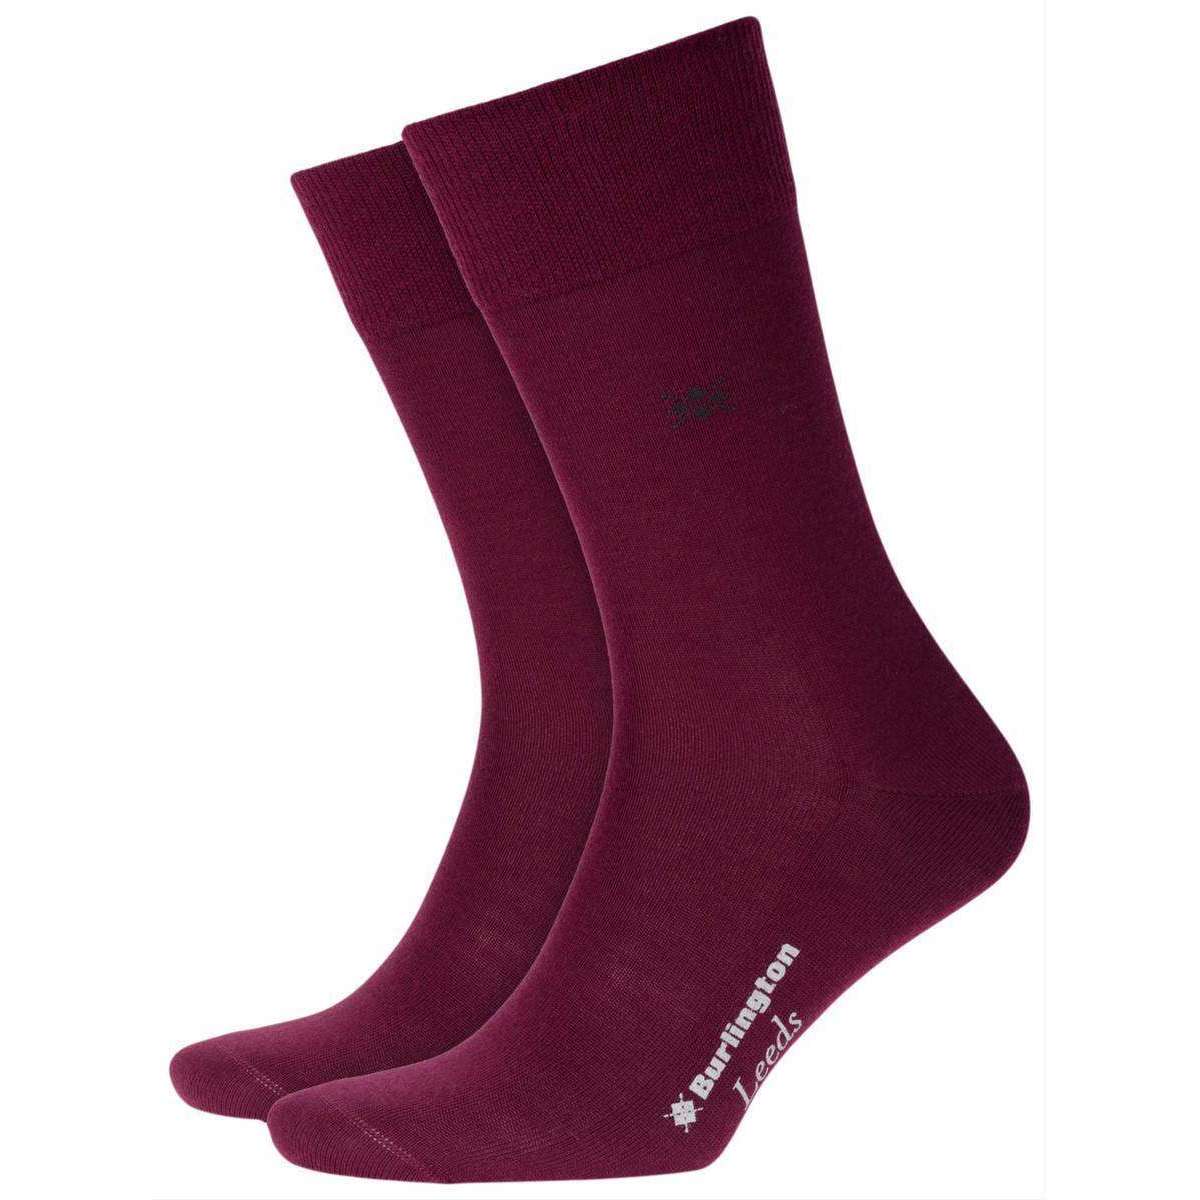 Burlington Leeds Socks - Merlot Red